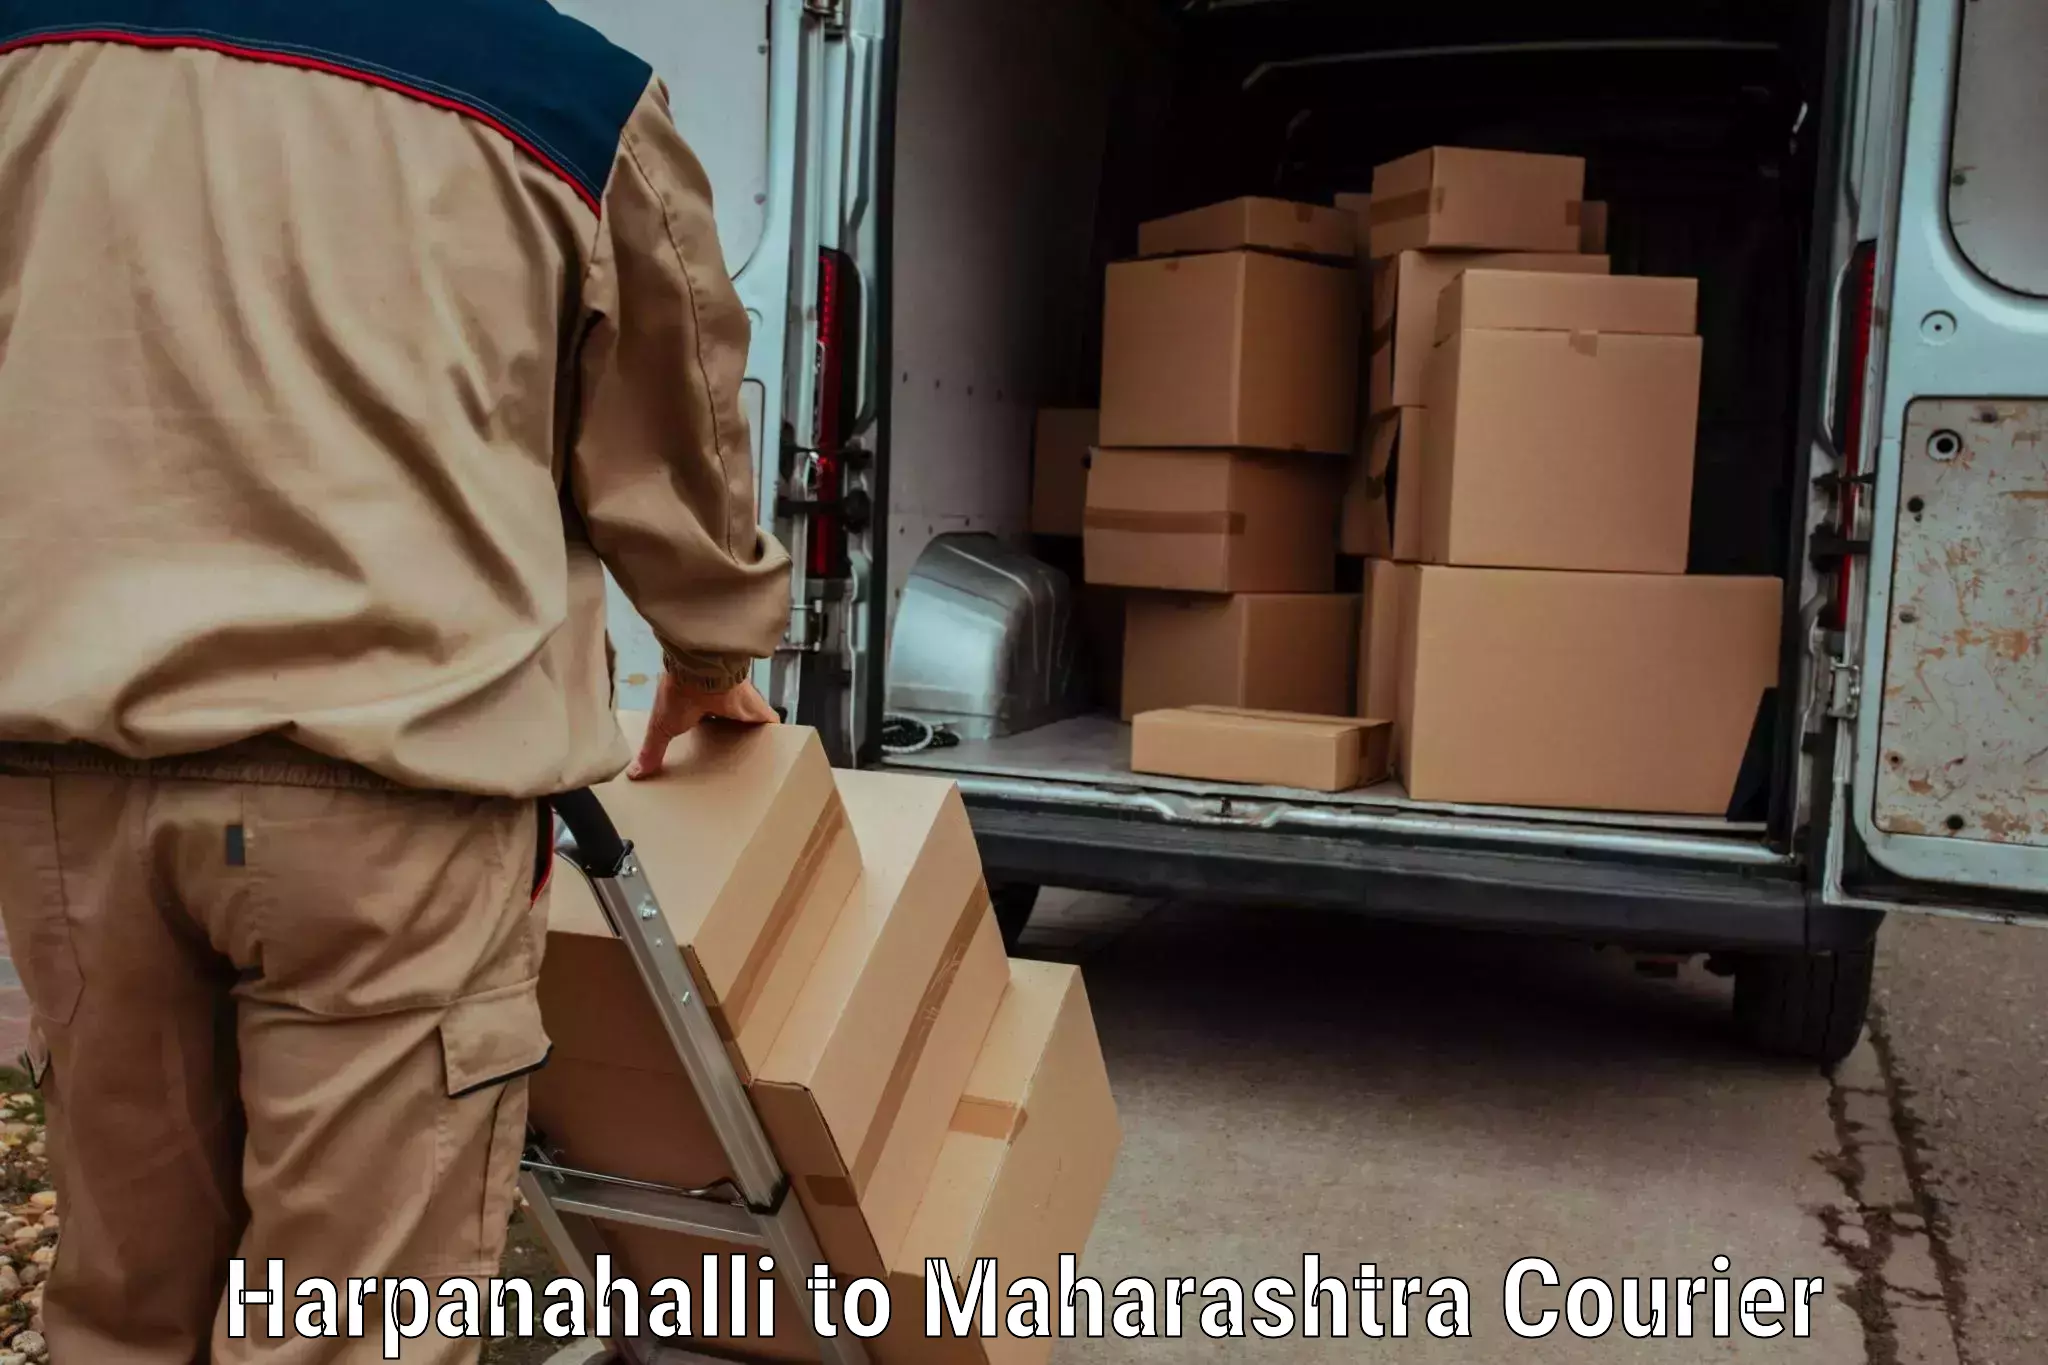 Same day luggage service Harpanahalli to Maharashtra